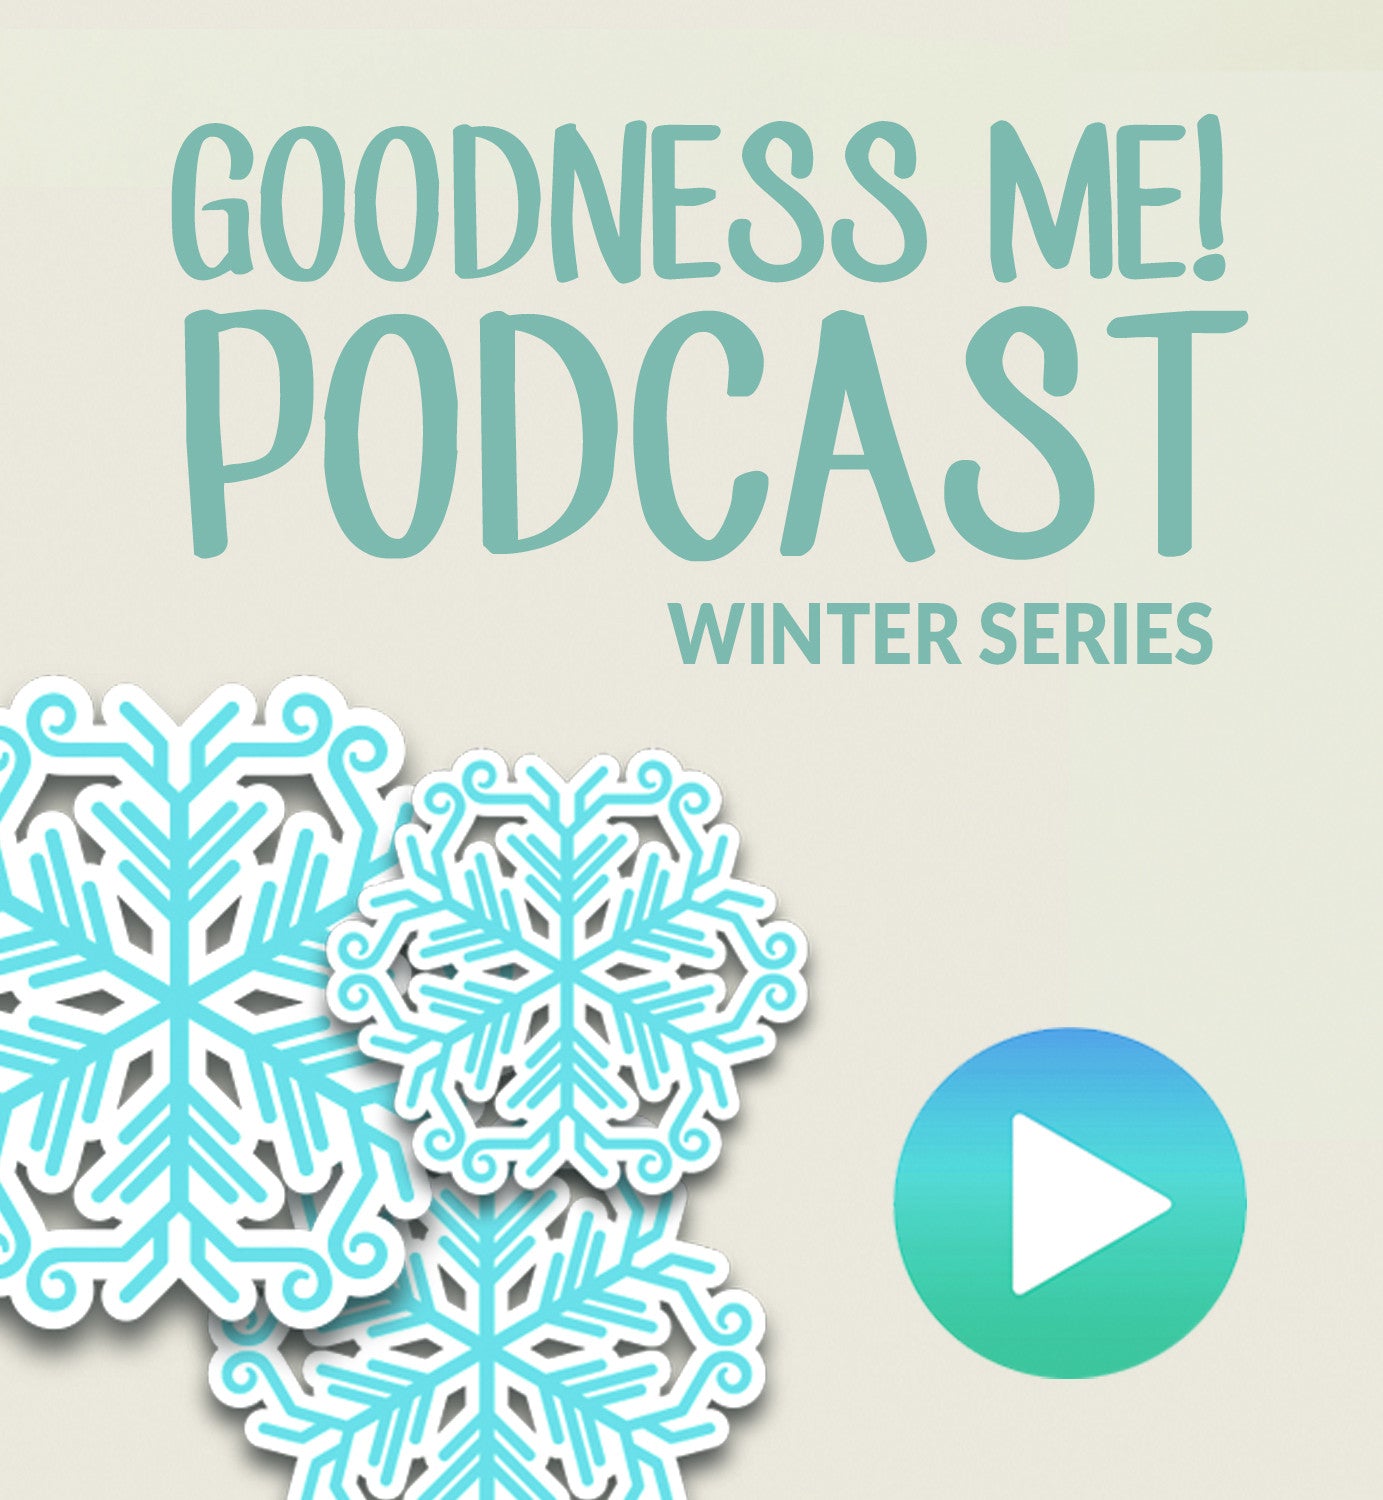 Jan 14 Goodness Me! Podcast--Part 1: The Detox Puzzle